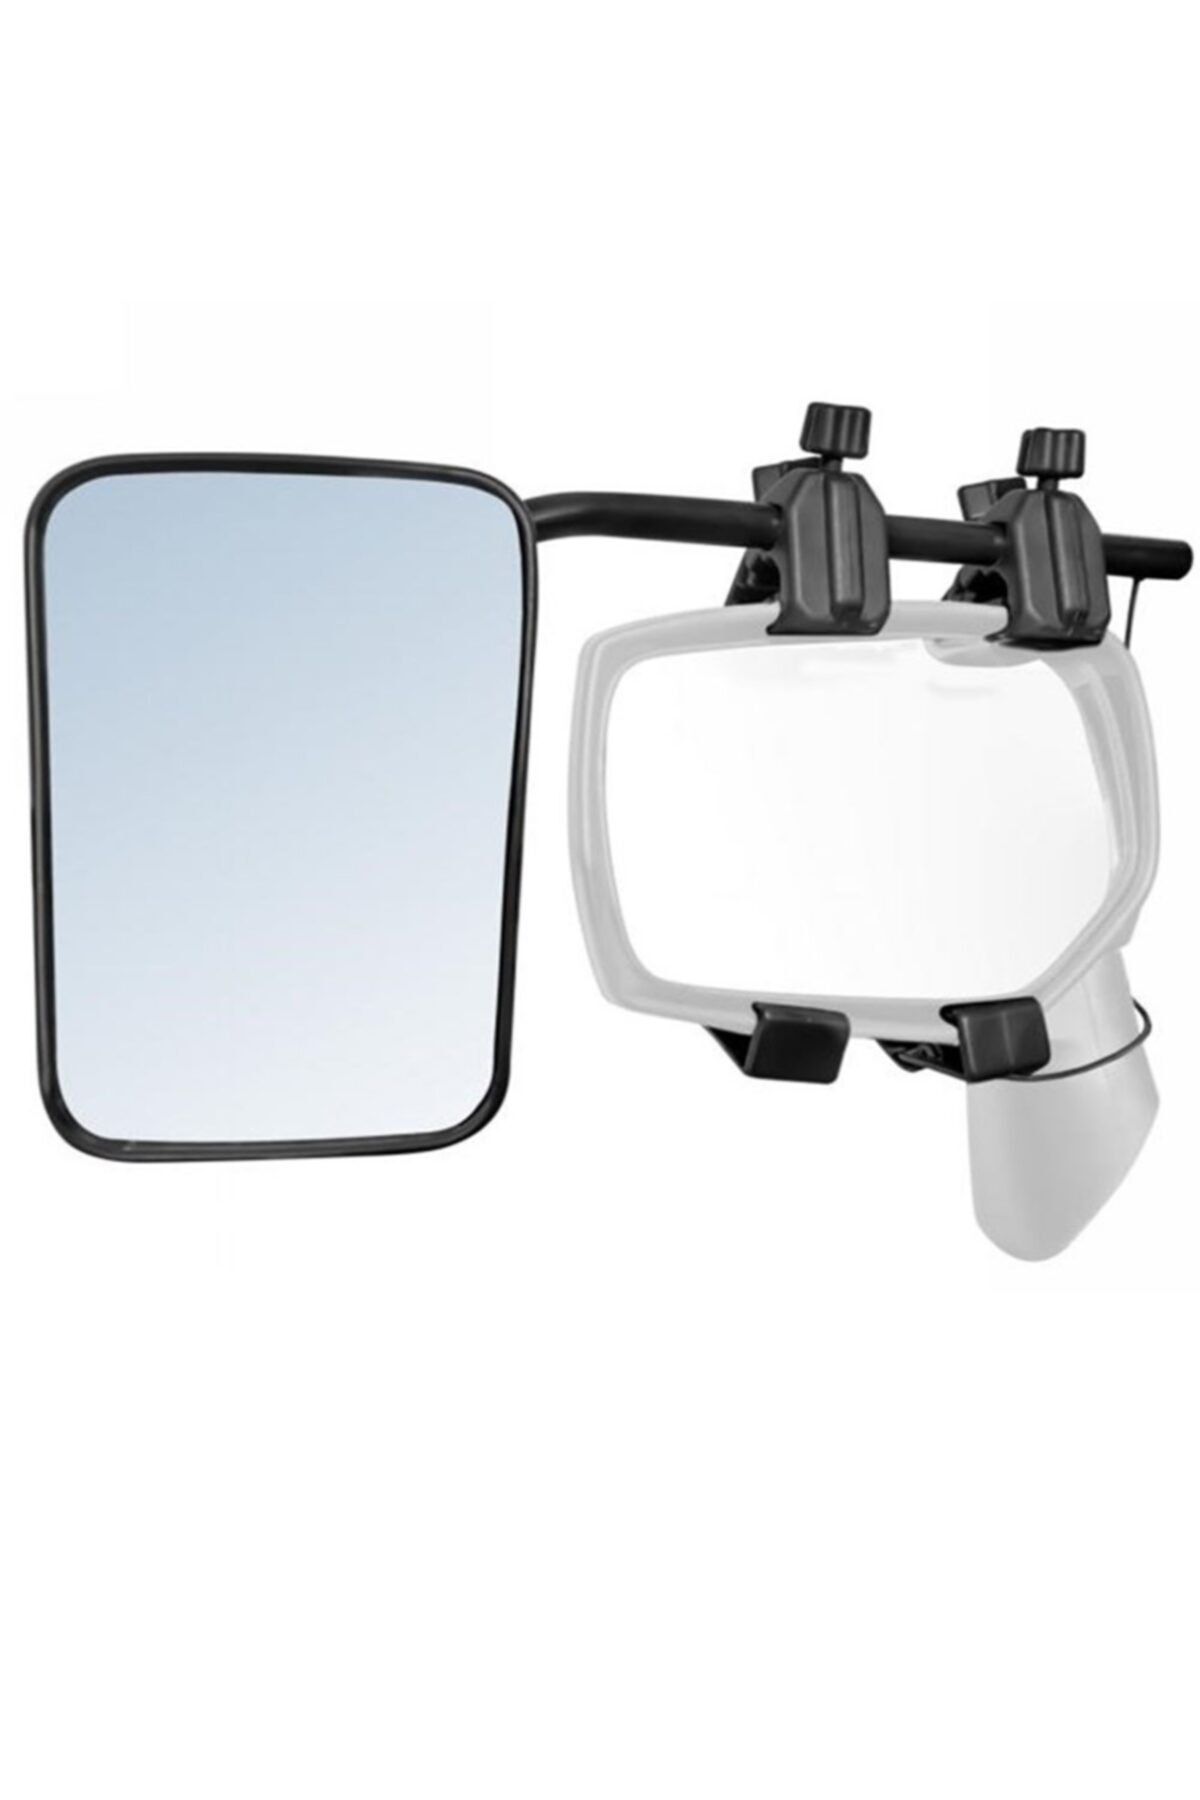 Караван зеркал. Зеркала Towing Mirror. Дополнительное зеркало для прицепа. Дополнительные зеркала для буксировки прицепа.